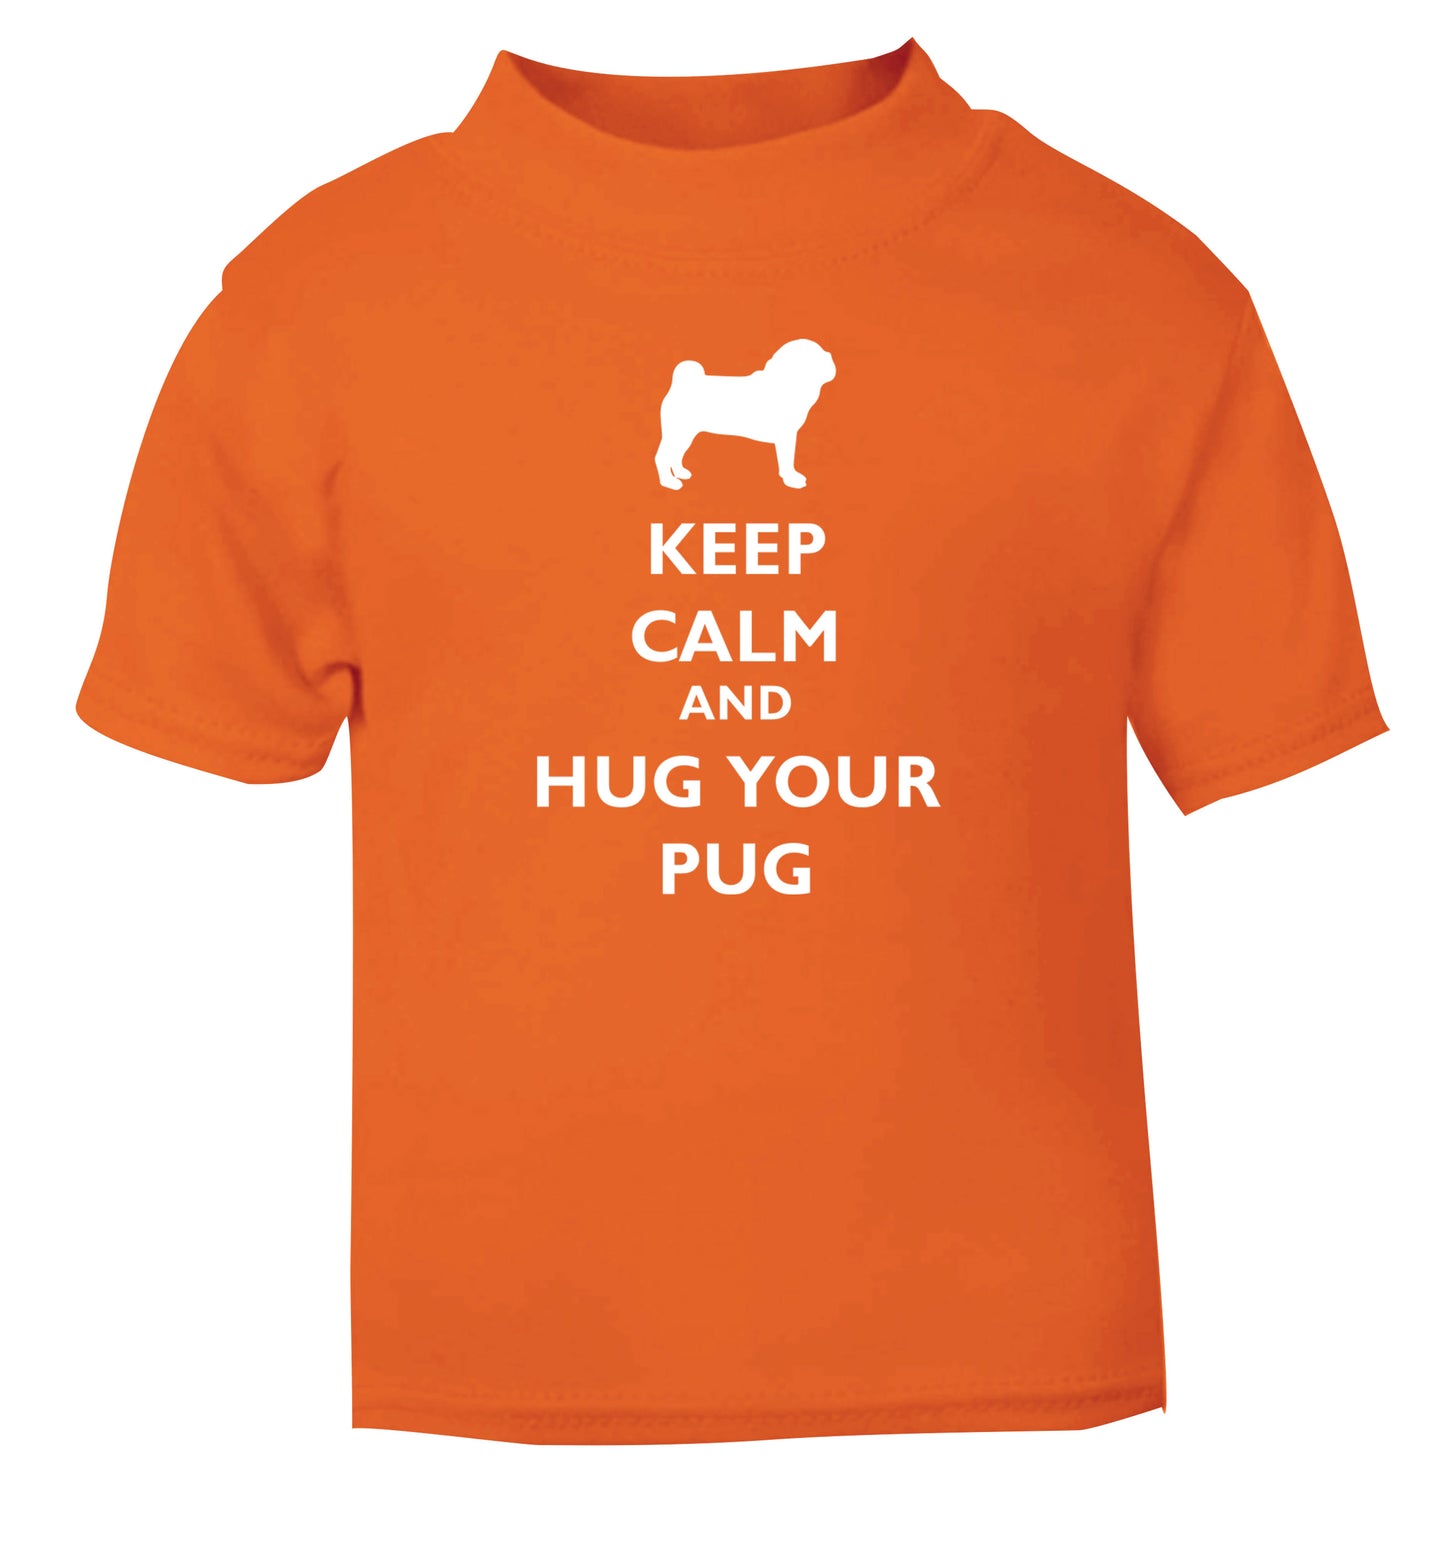 Keep calm and hug your pug orange Baby Toddler Tshirt 2 Years